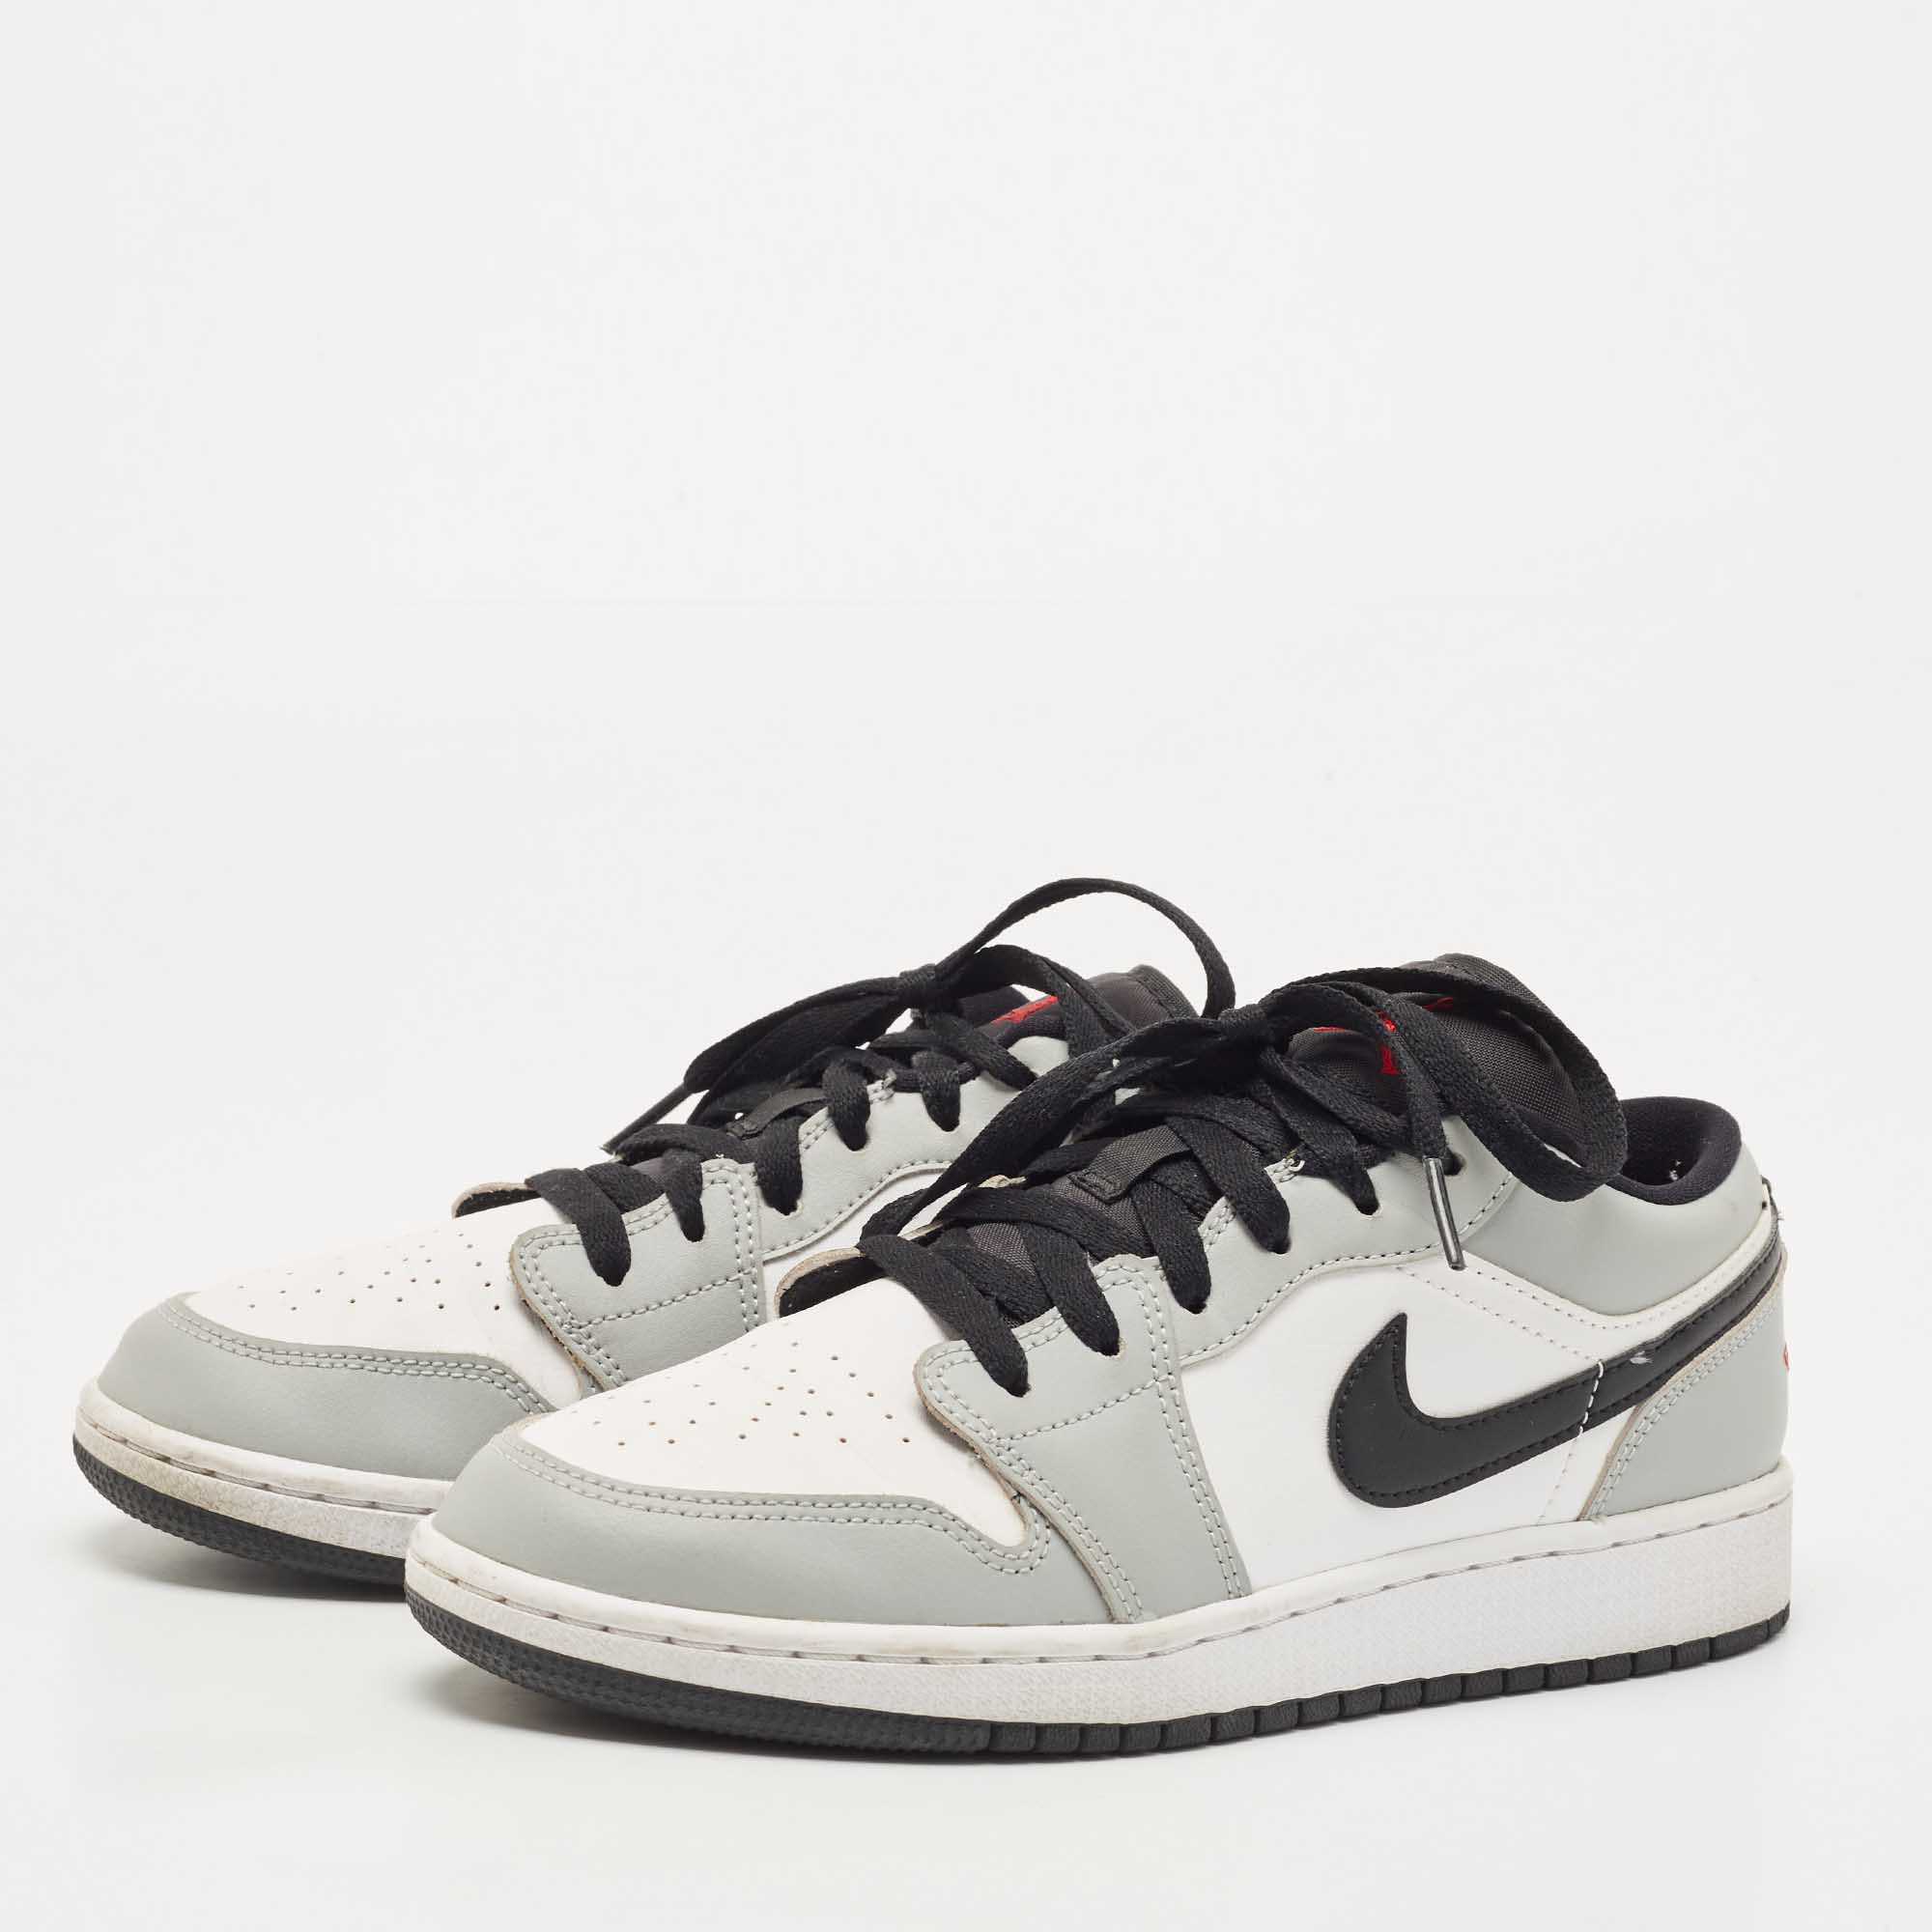 

Air Jordan Grey/White Leather 1 Low Light Smoke Grey Sneakers Size